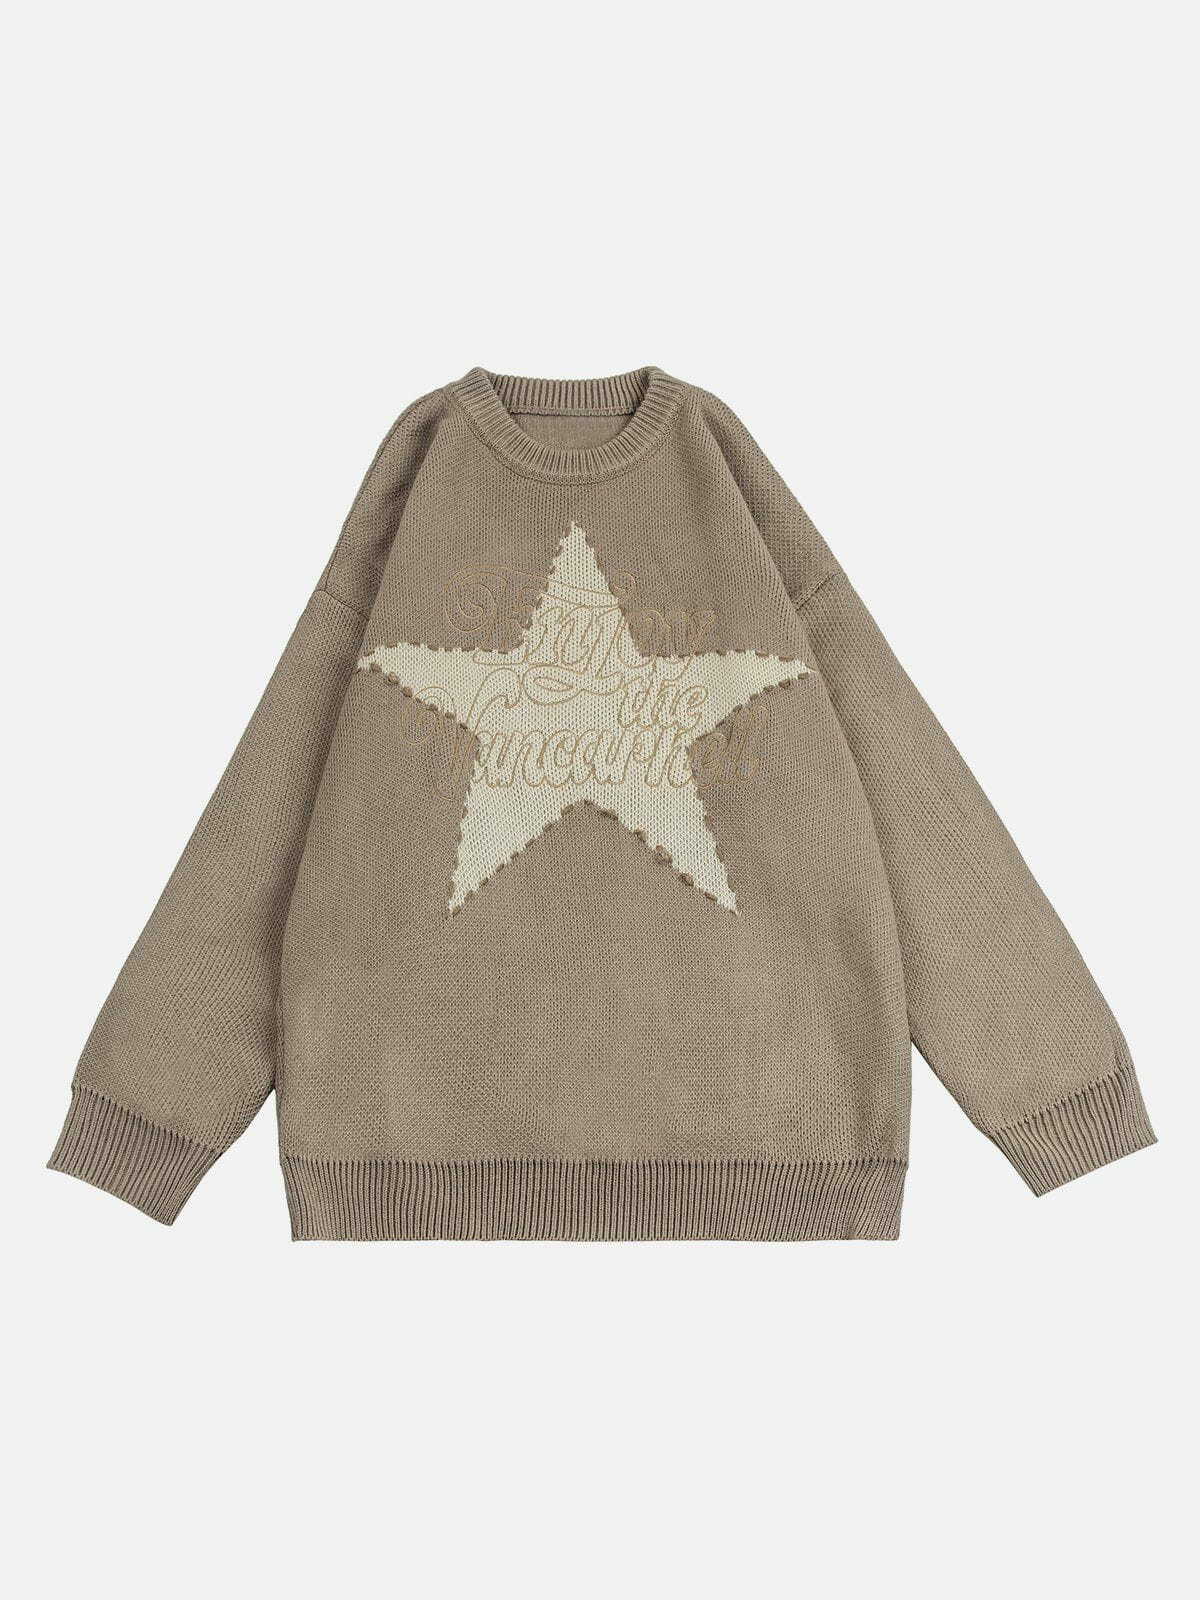 pentagram patchwork sweater edgy streetwear statement 6443